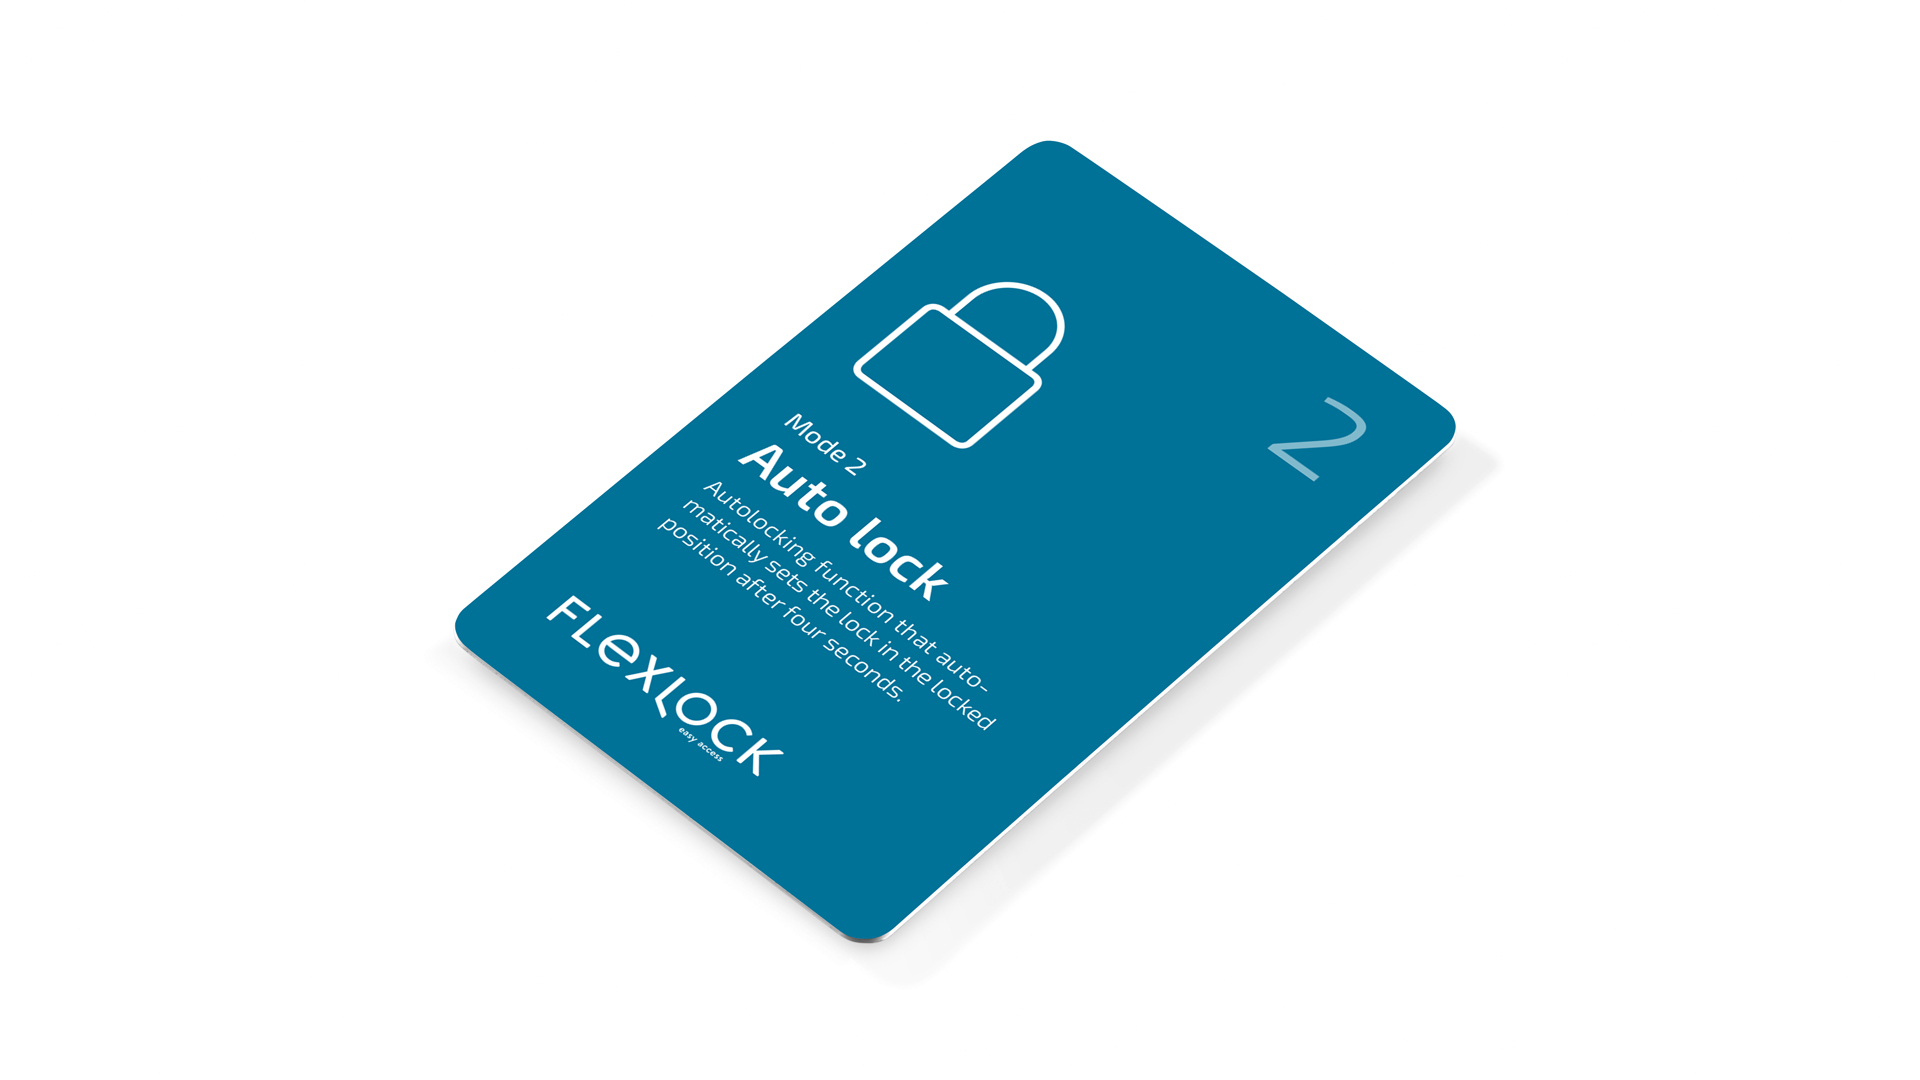 Mode card/Mode 2 - Auto lock